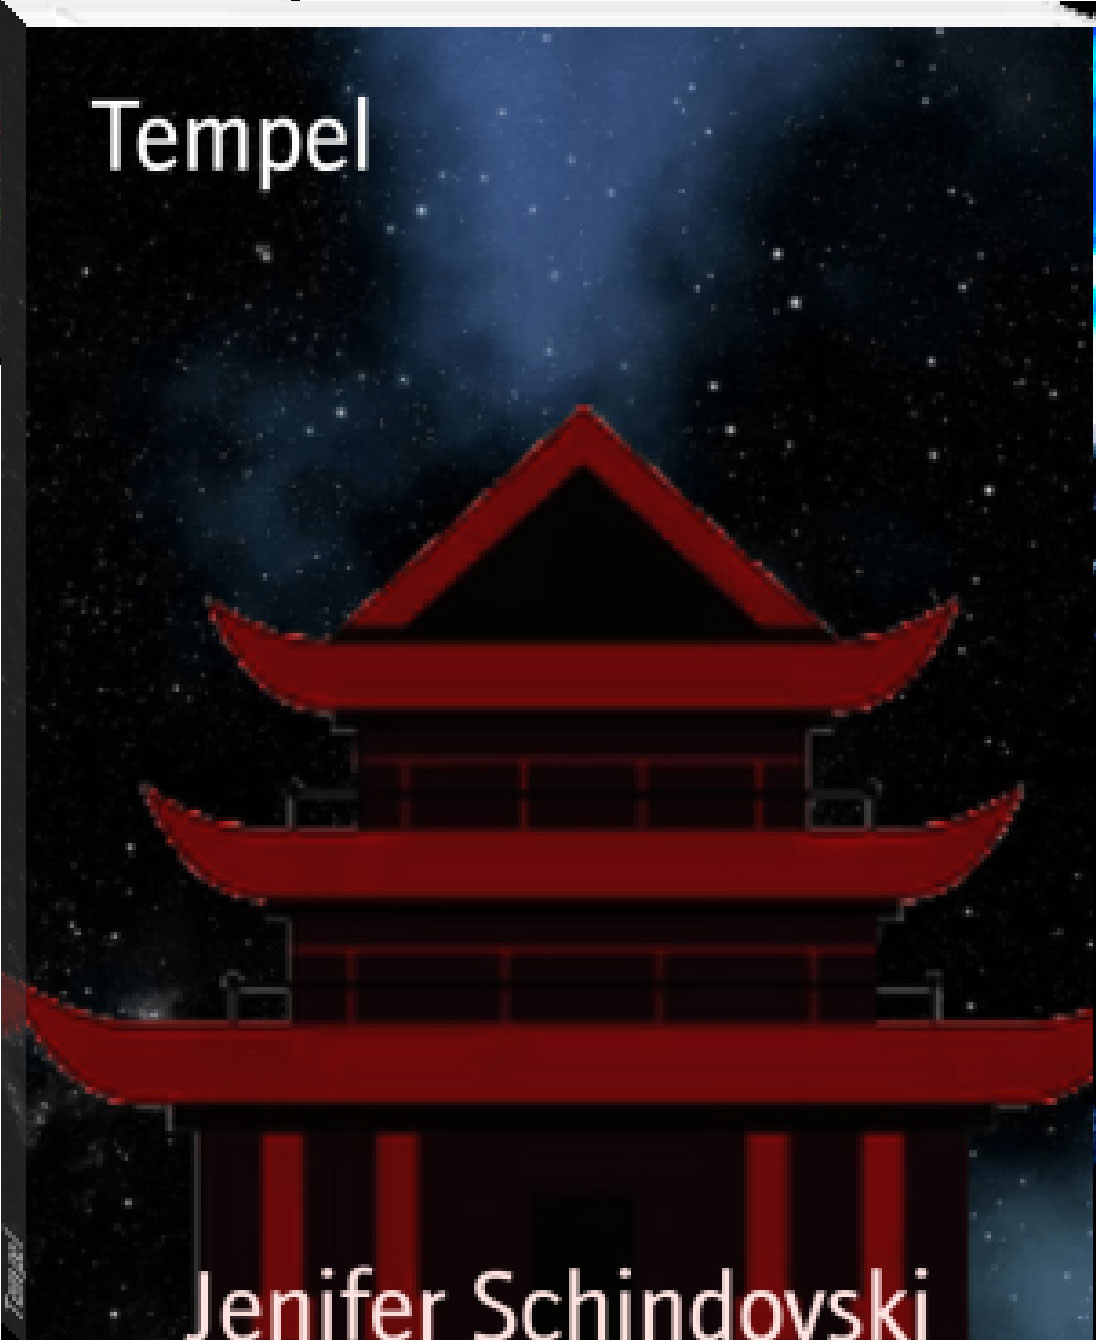 Tempel rendition image